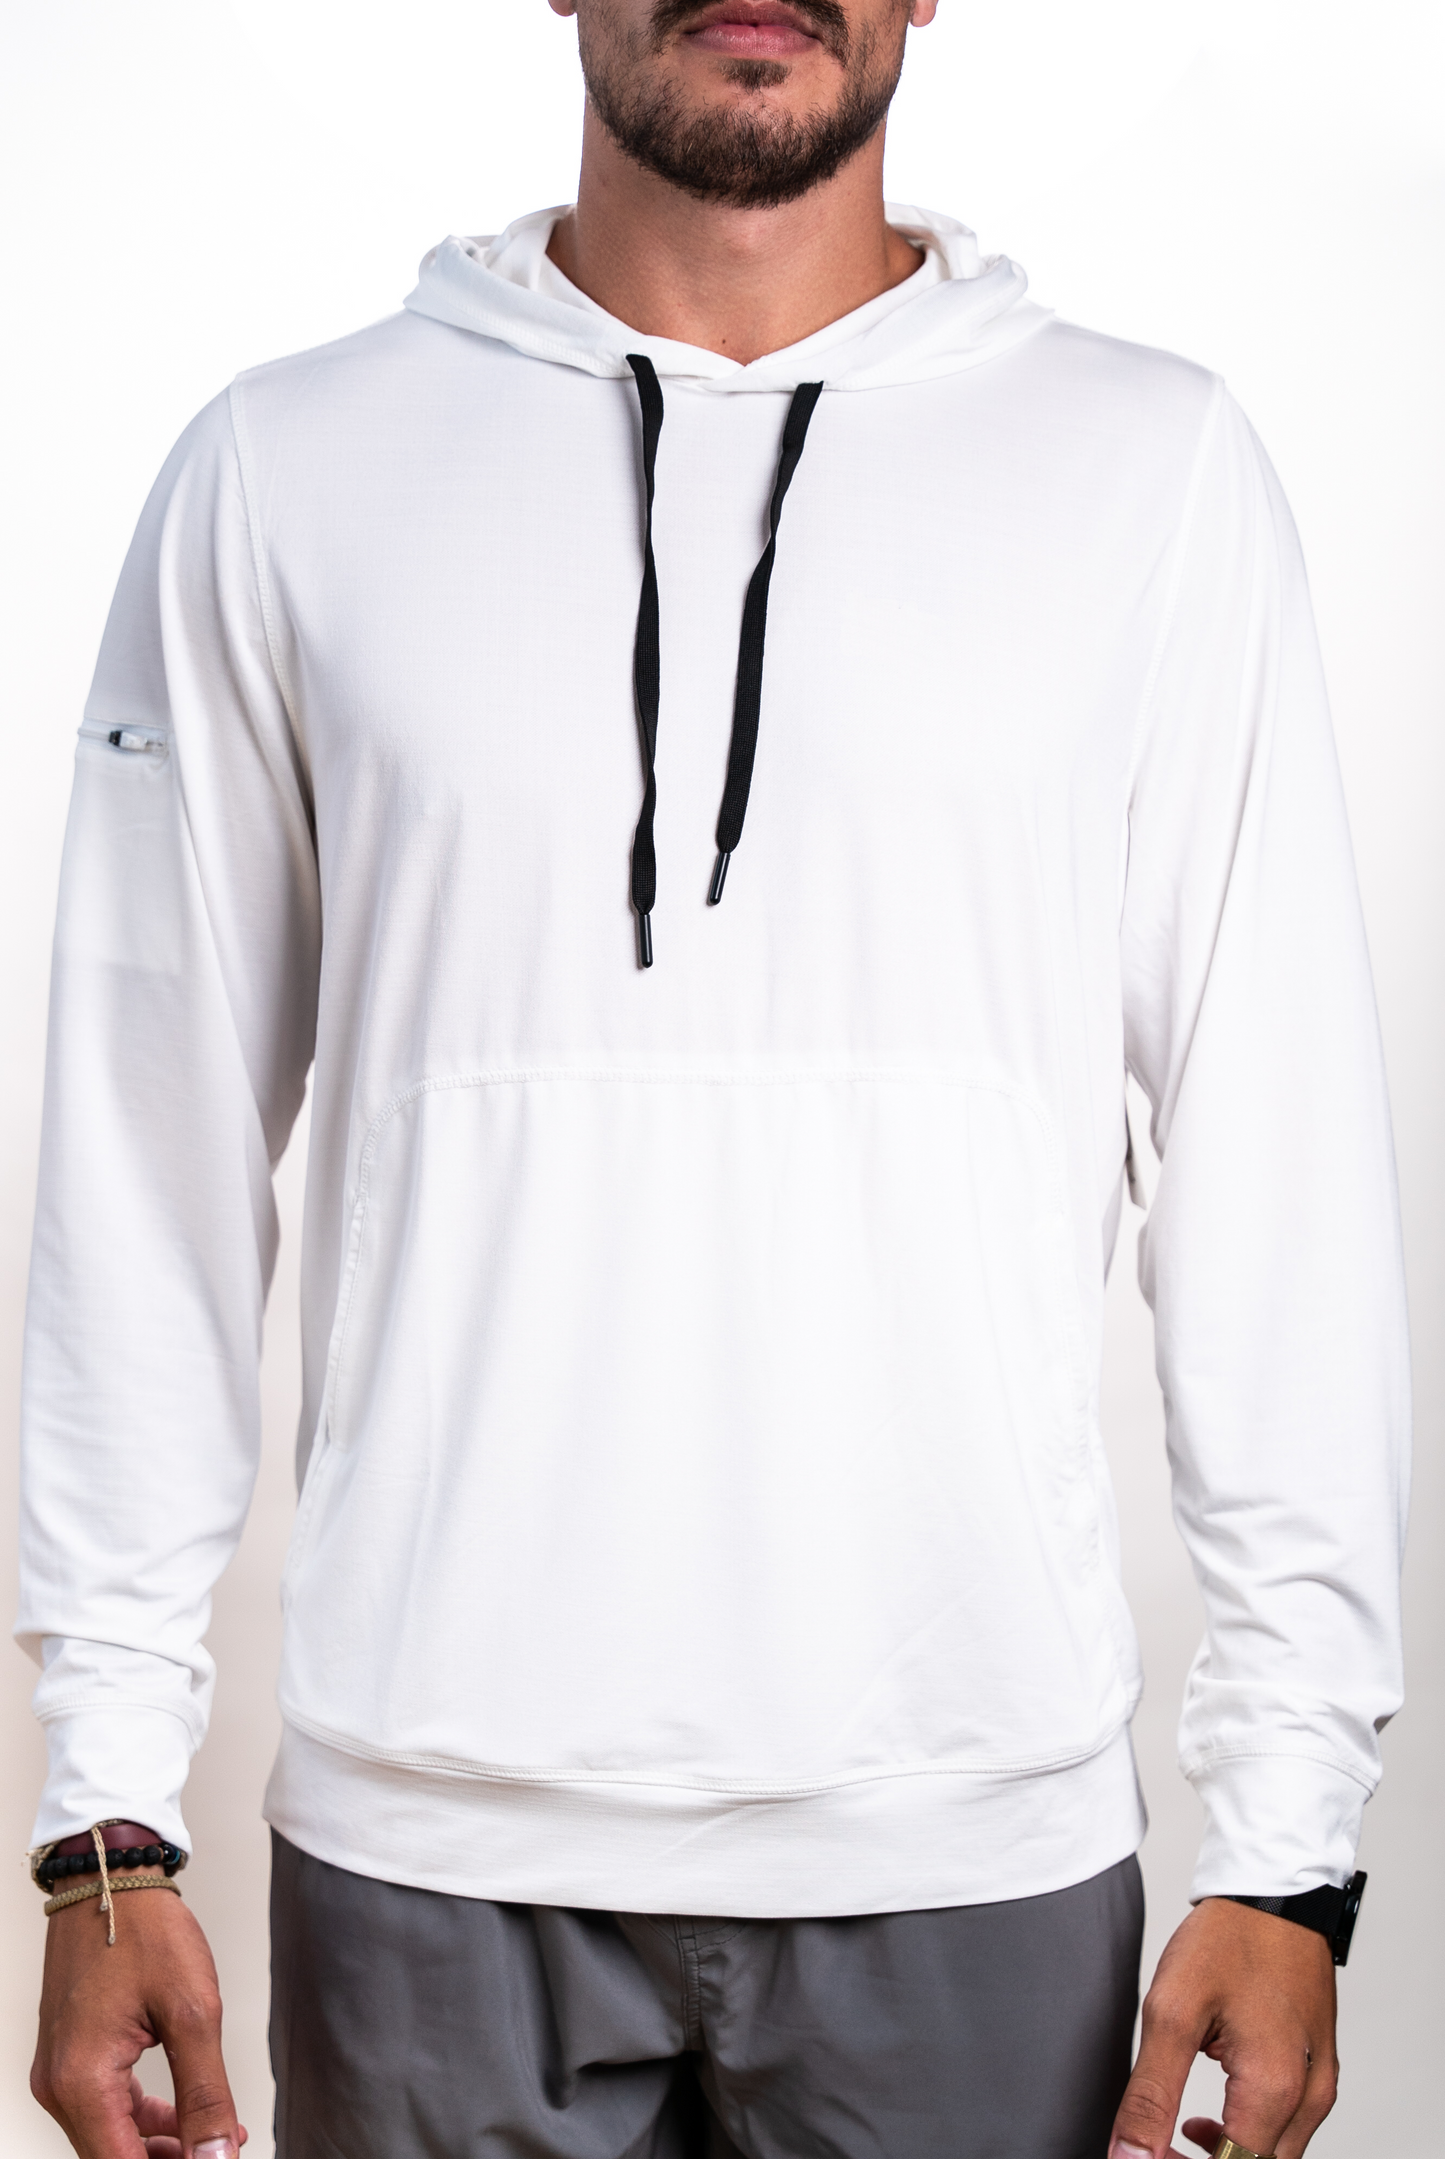 STLSTT09 - Tech Slub LS Hood White / S Shirts & Tops